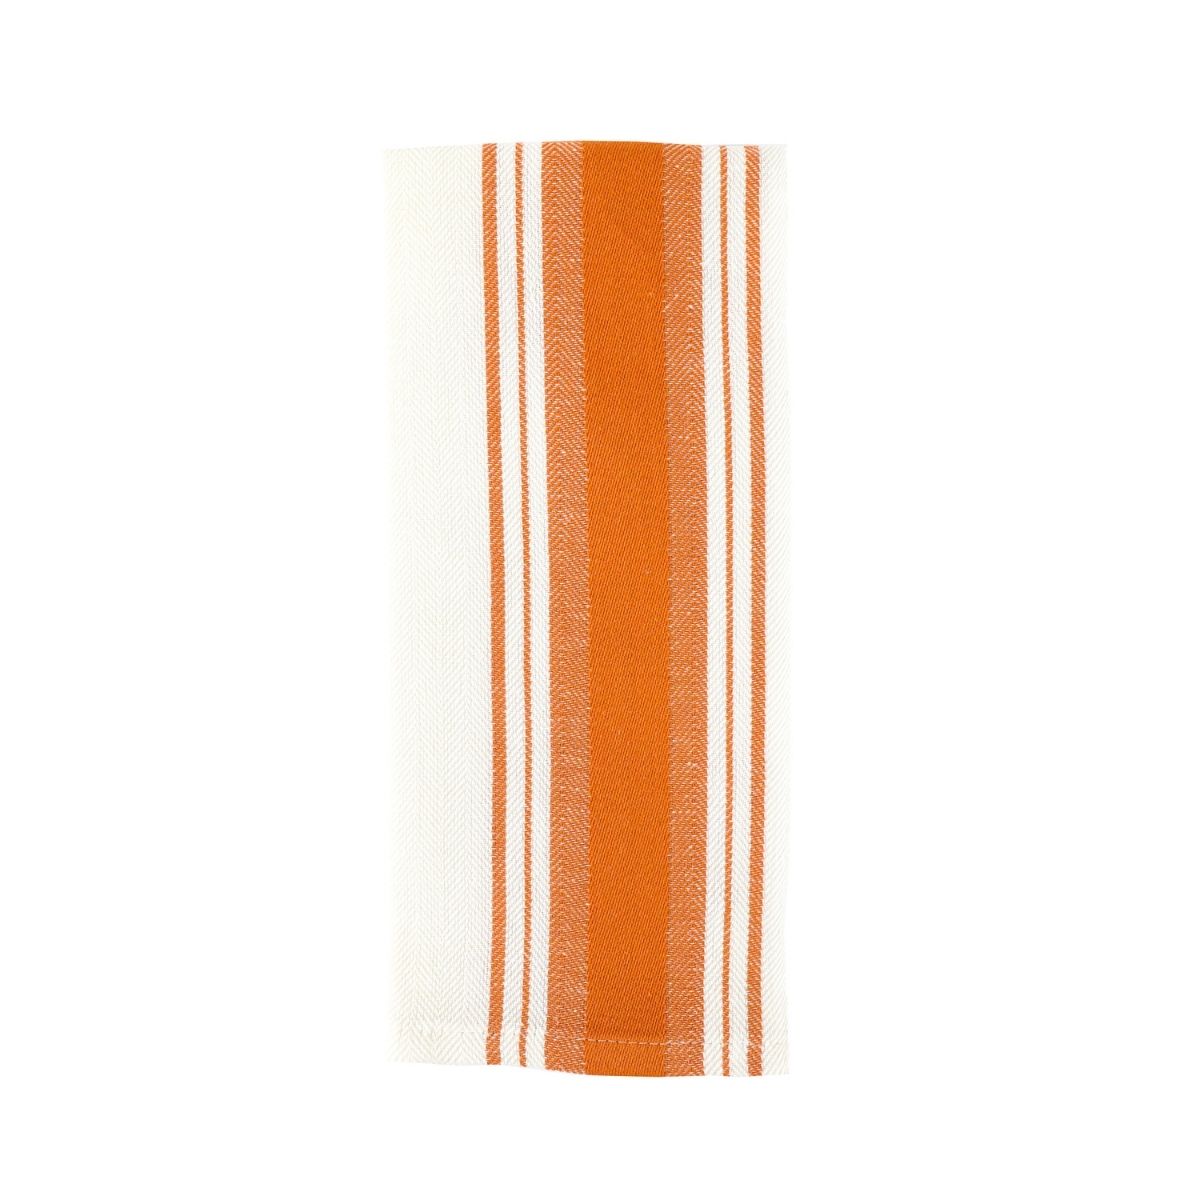 Sur La Table Holiday Striped Kitchen Towels, 6 pk. - Beige/White